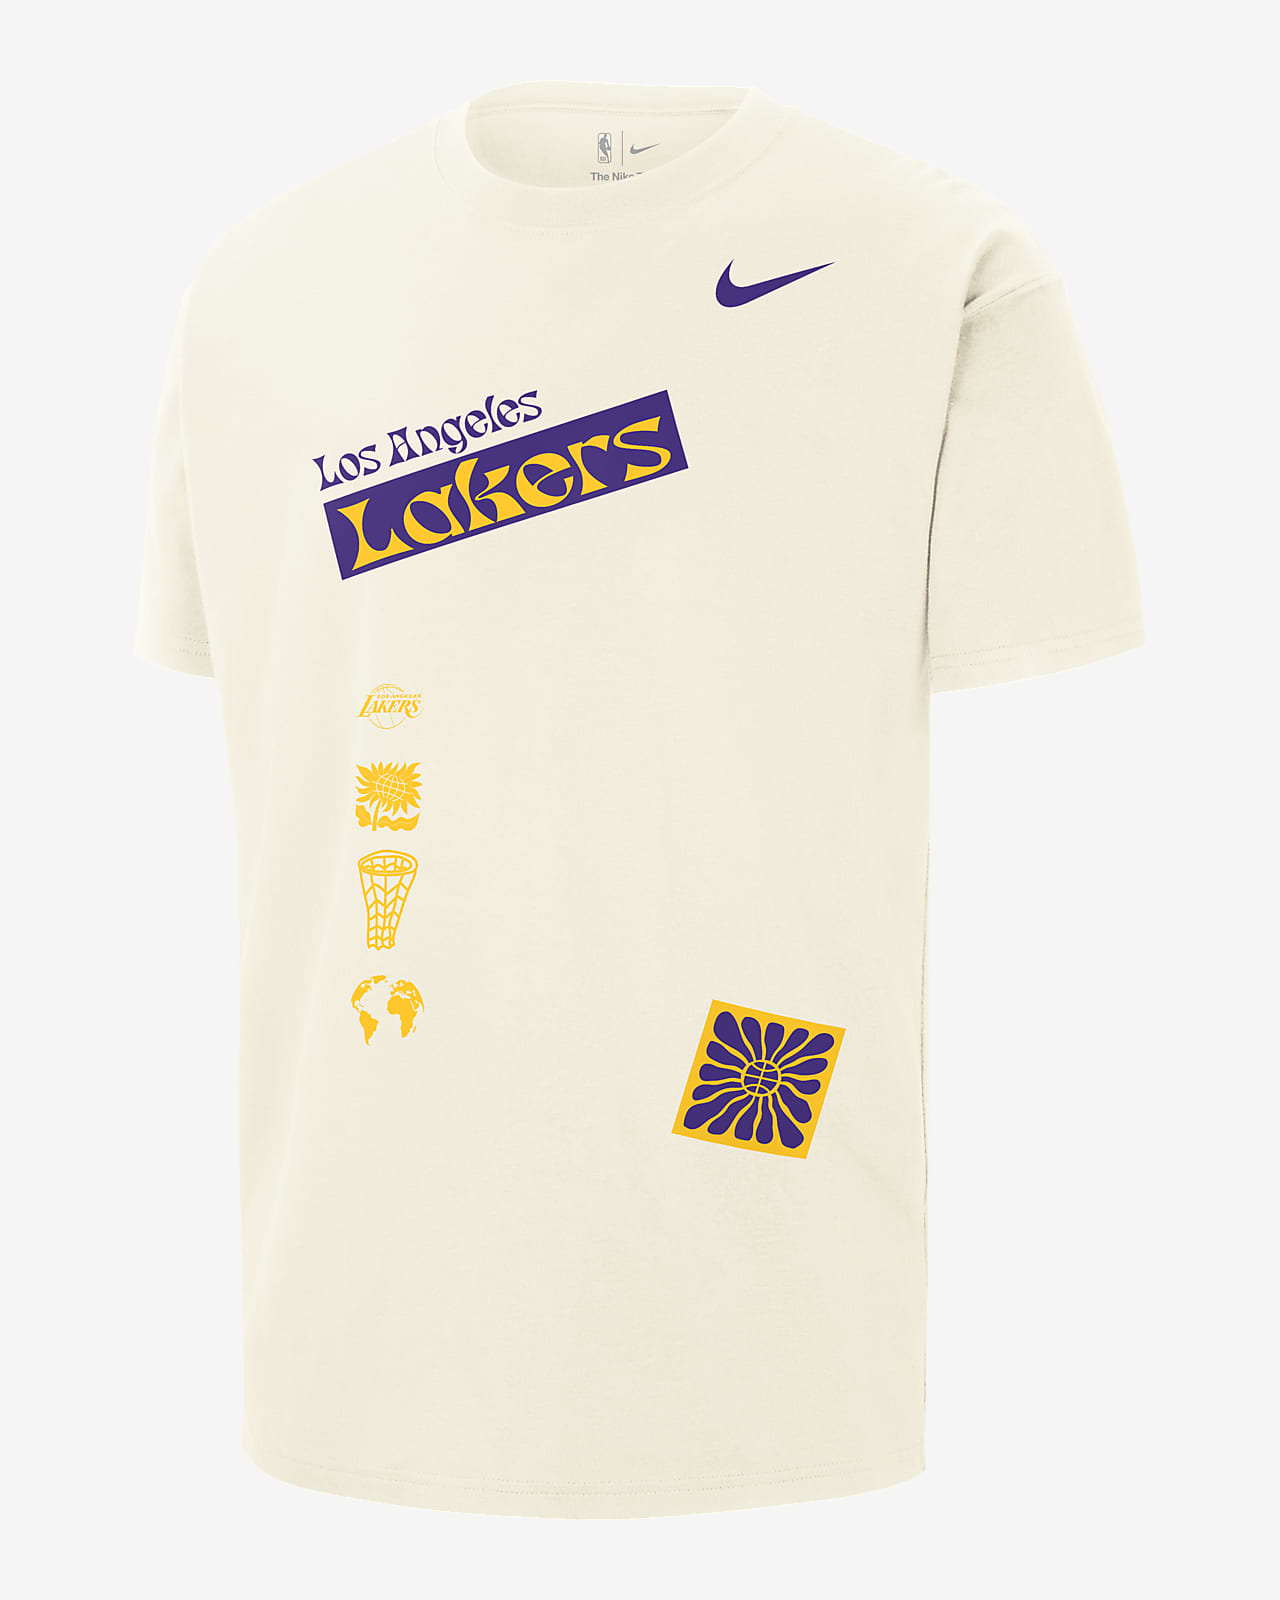 2023/24 赛季洛杉矶湖人队 City Edition Nike NBA Courtside 男子T恤